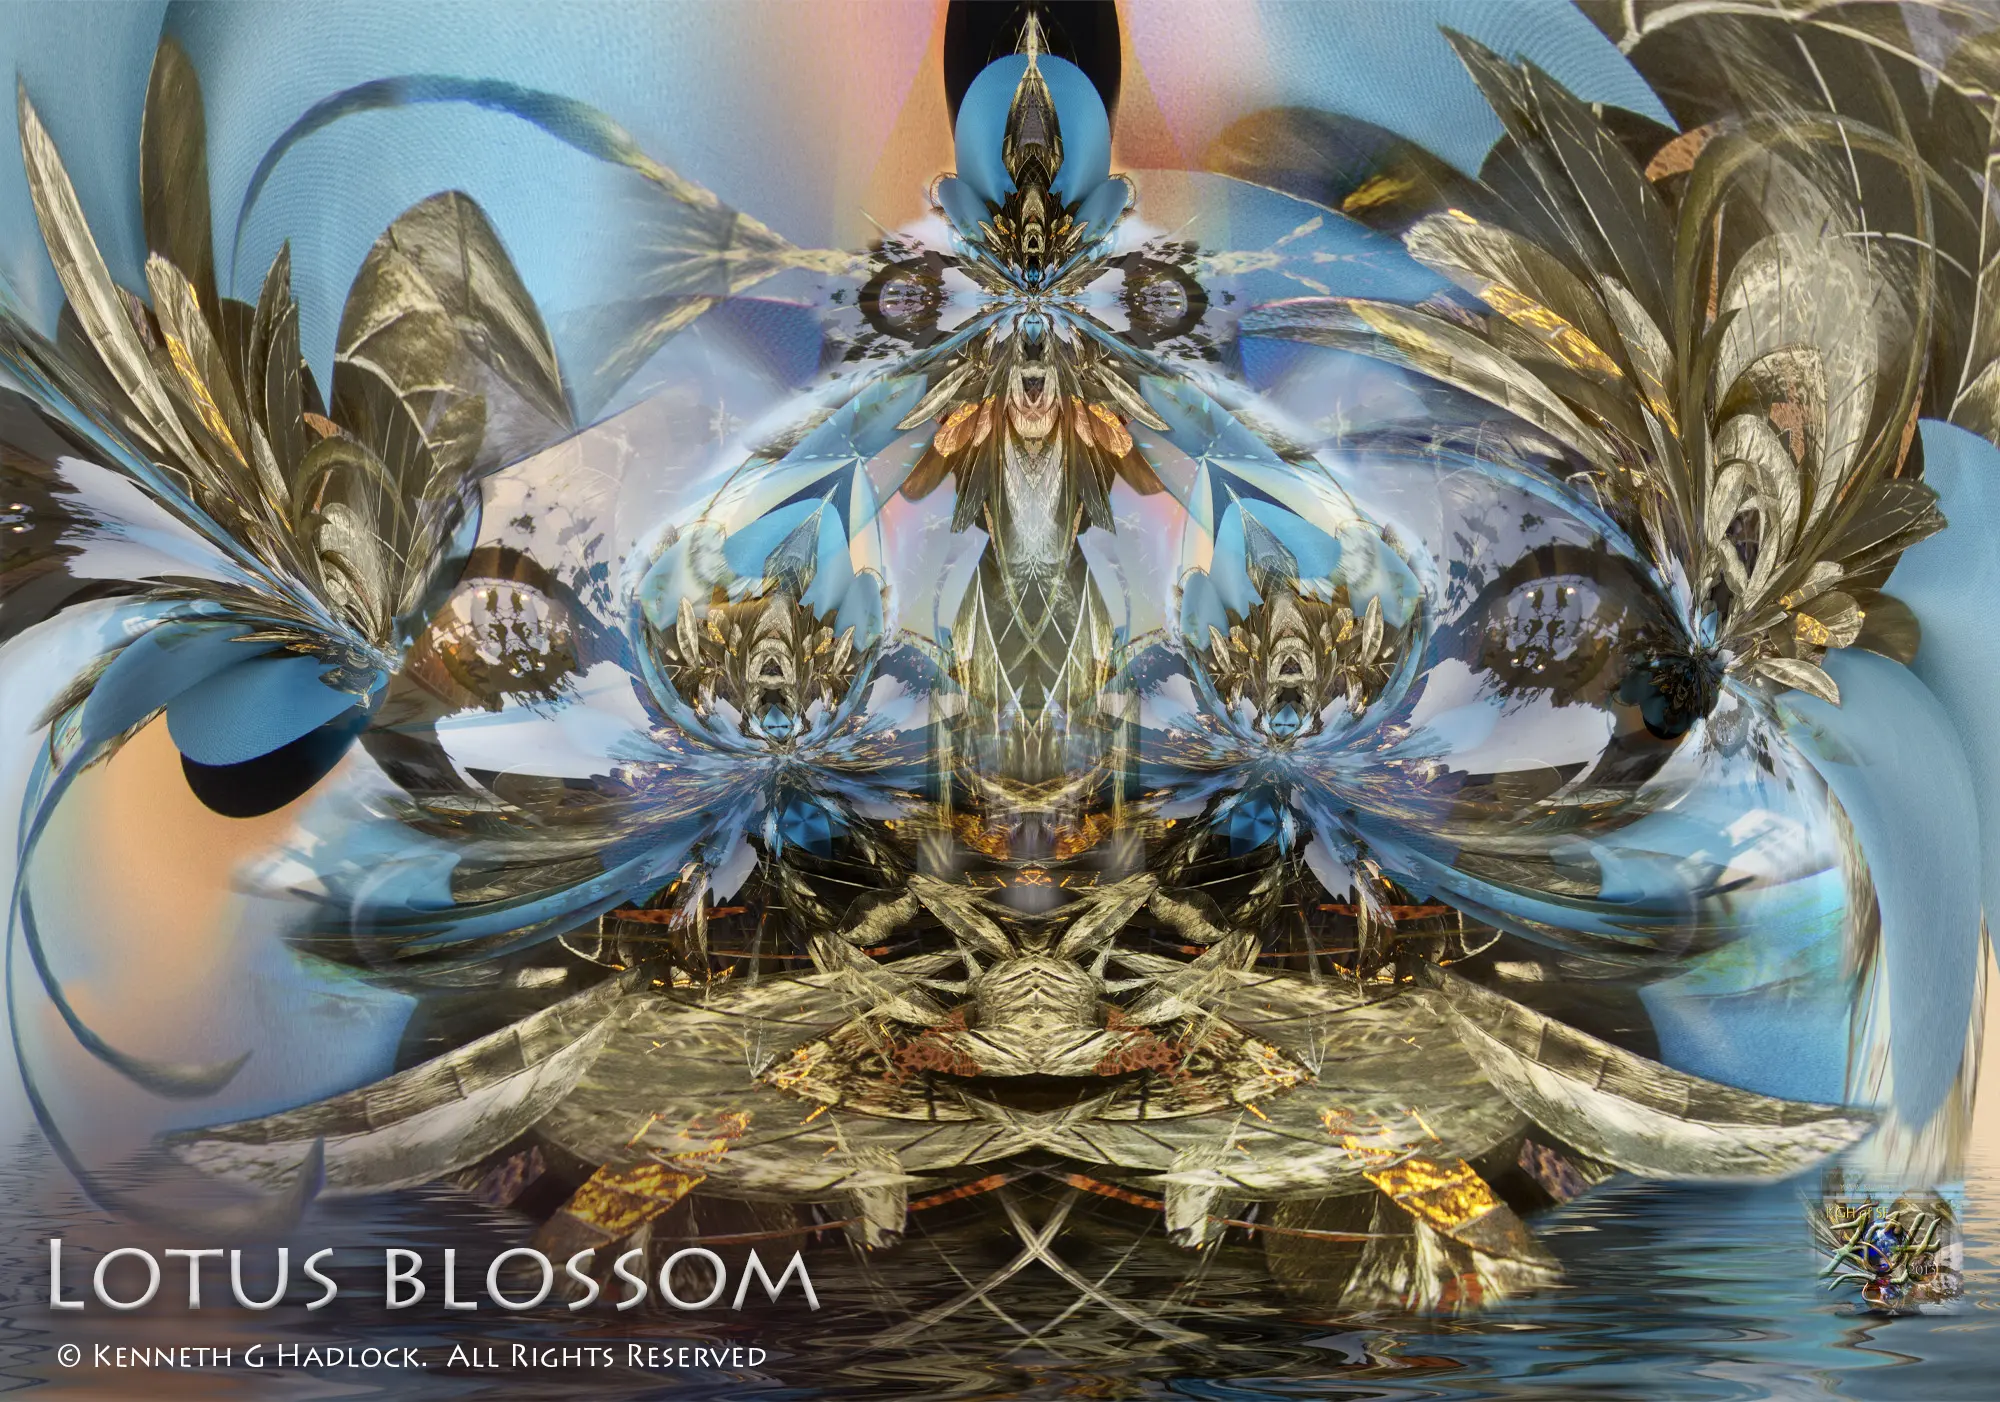 Digital Artwork - "Lotus Blossom"